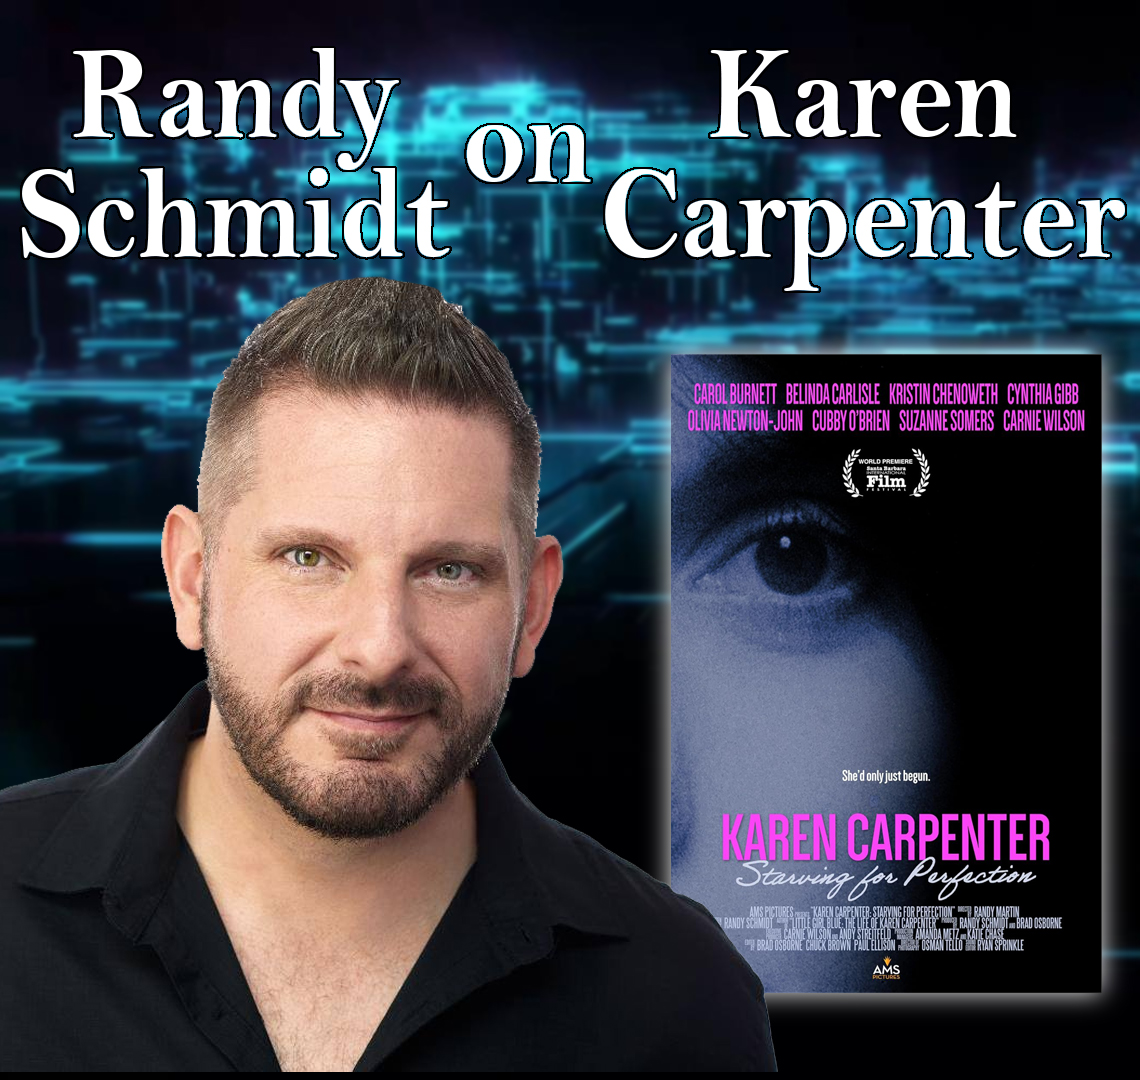 Karen Carpenter Biography Filmmaker Randy Schmidt Guests On Harvey Brownstone Interviews